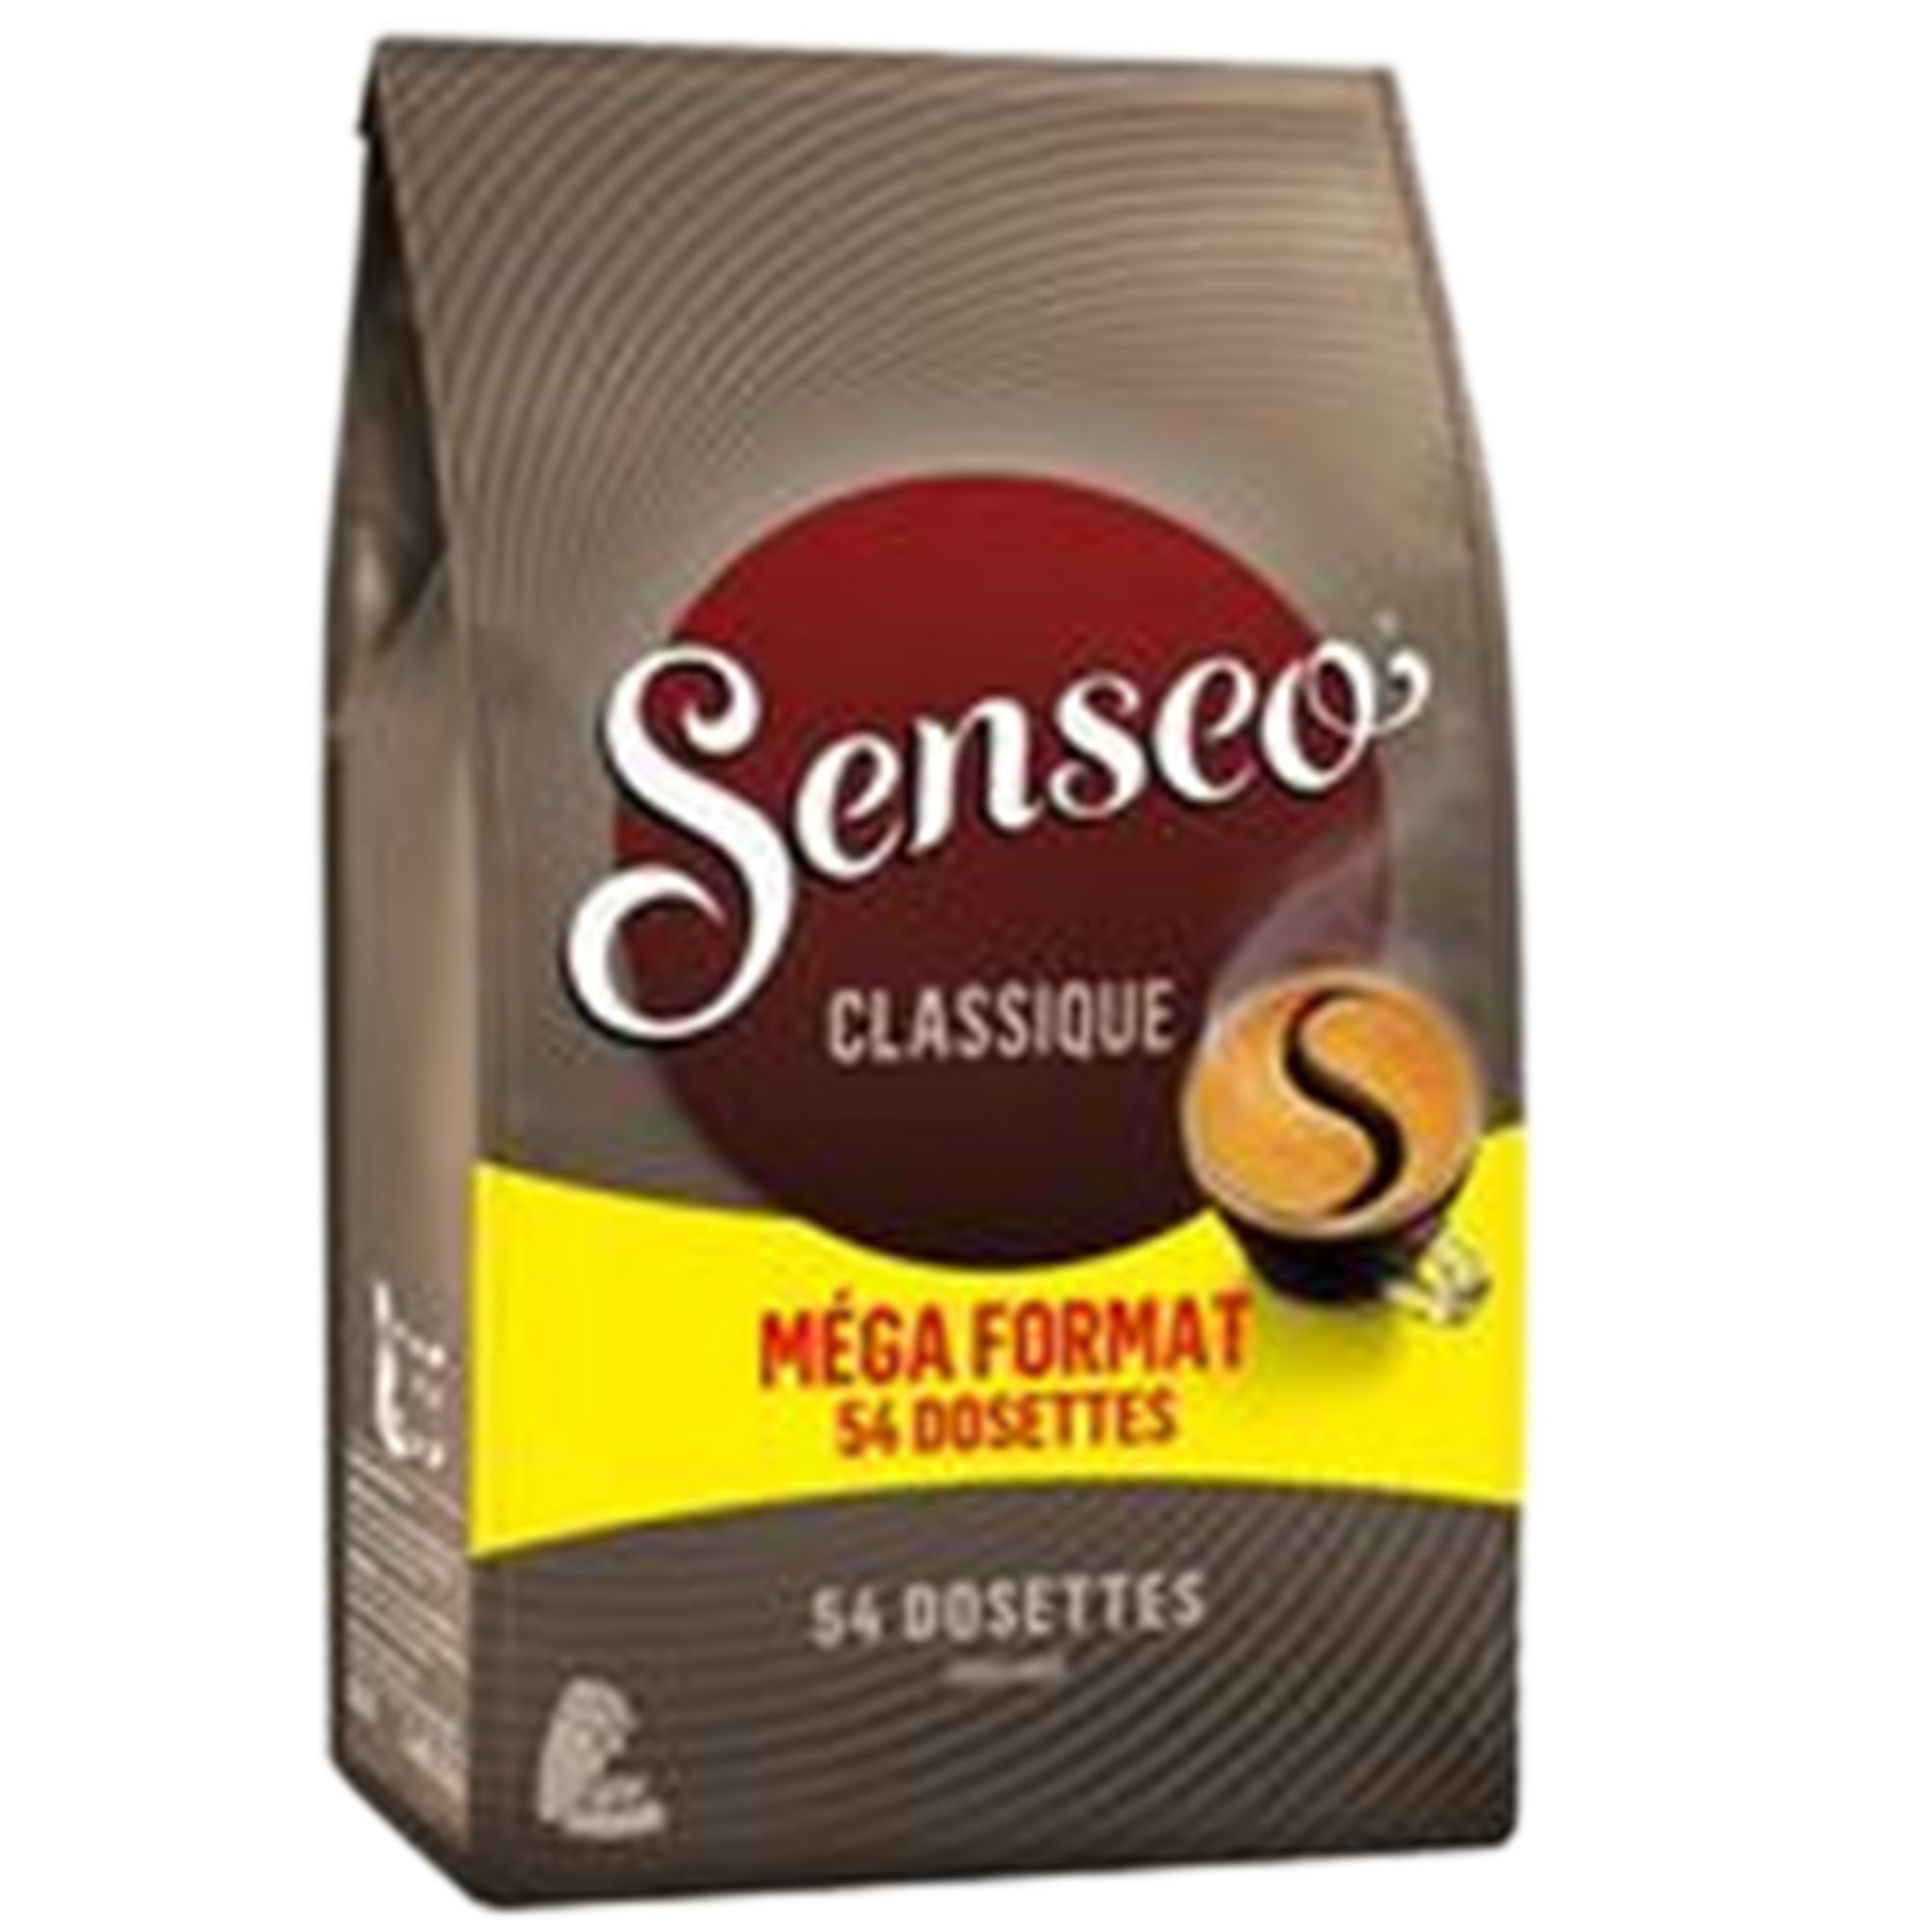 Senseo - Capsules à café SENSEO CLASSIQUE - Dosettes, supports